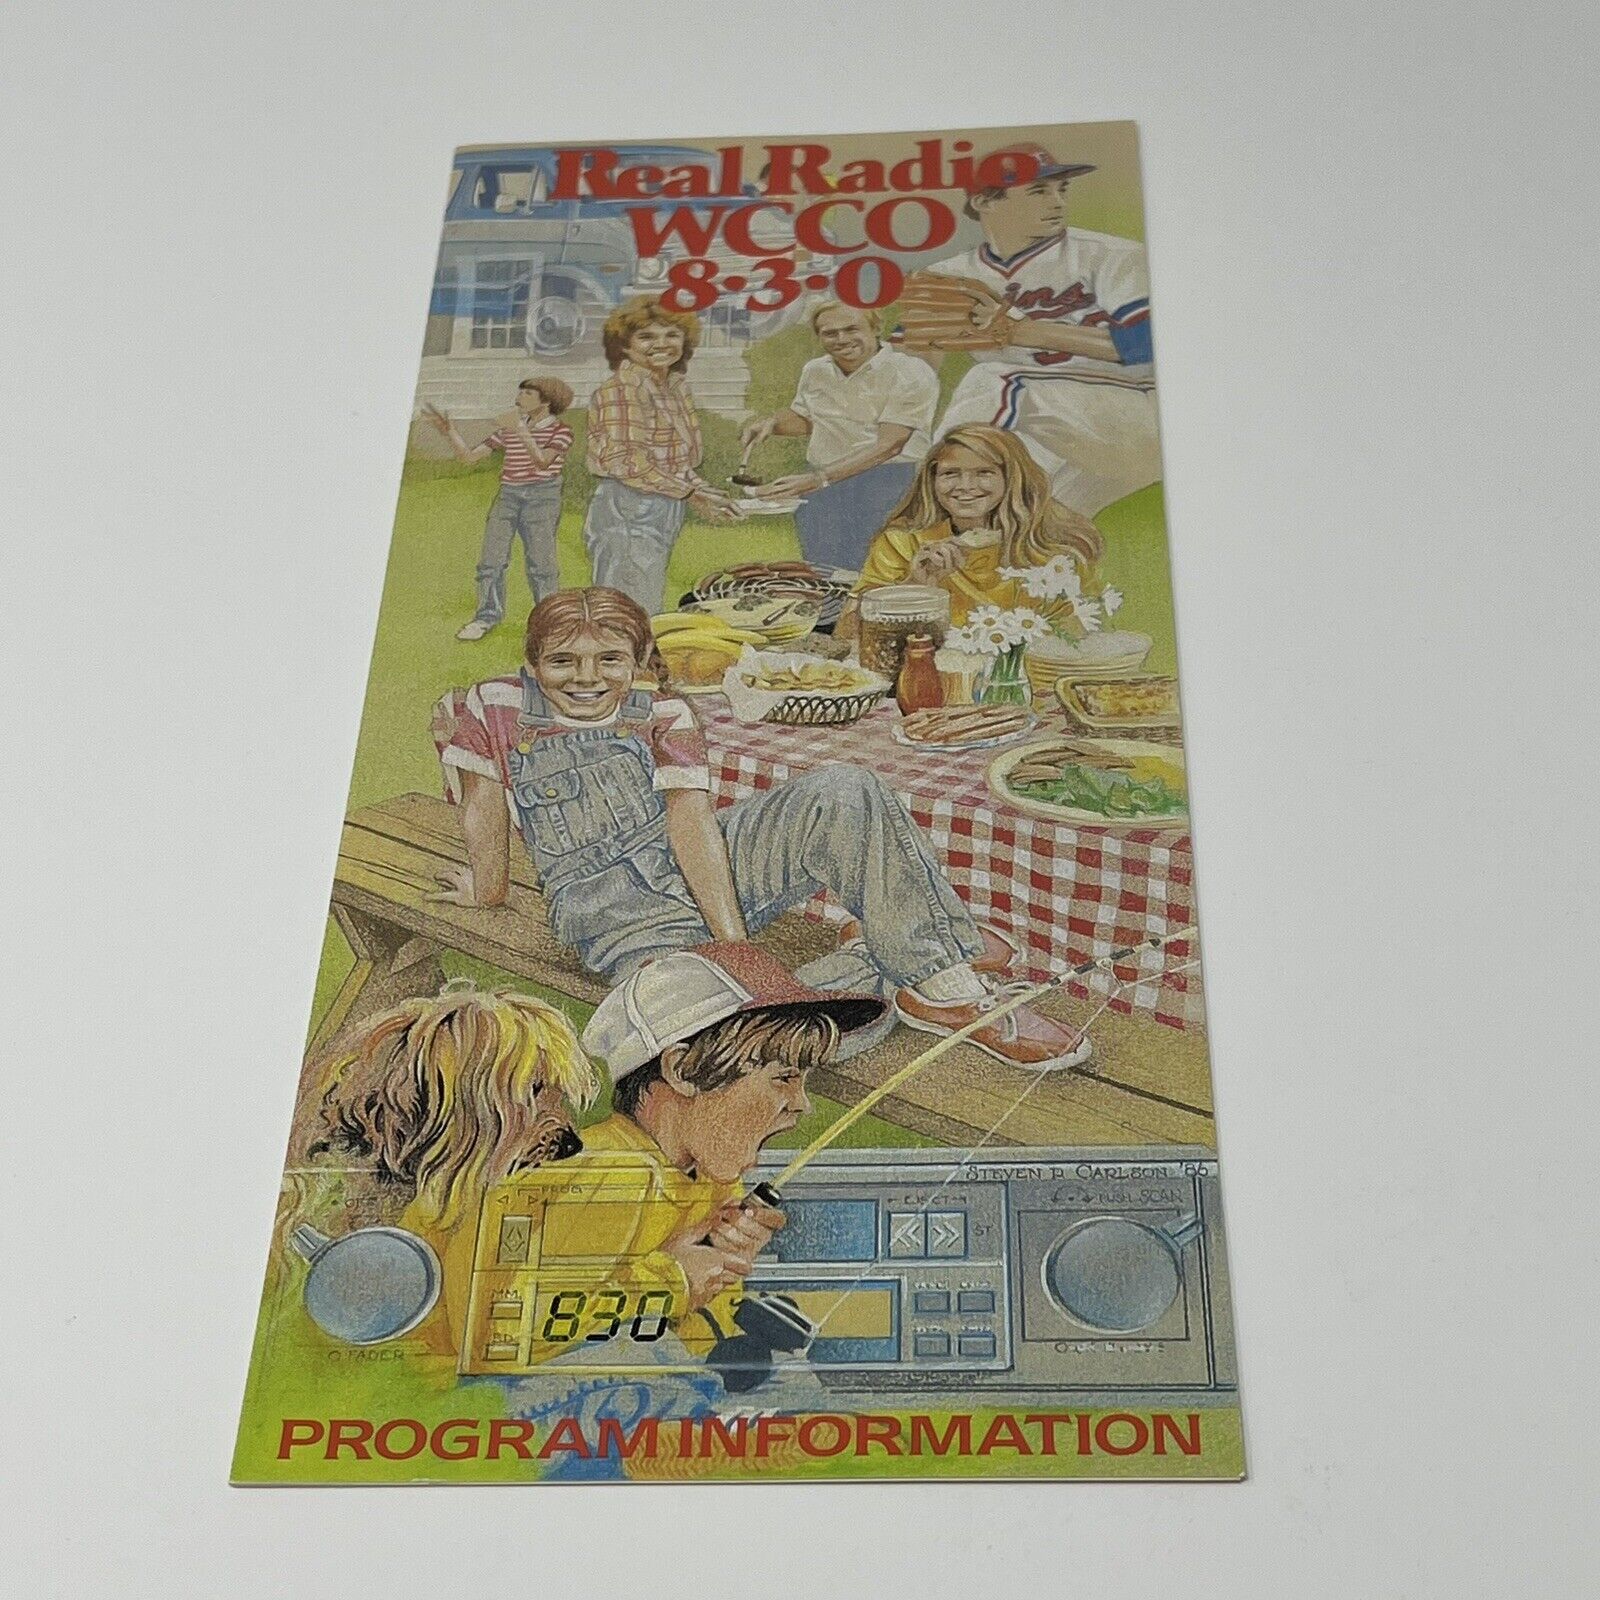 1980s WCCO Radio 830 Minneapolis St Paul MN Programming Brochure